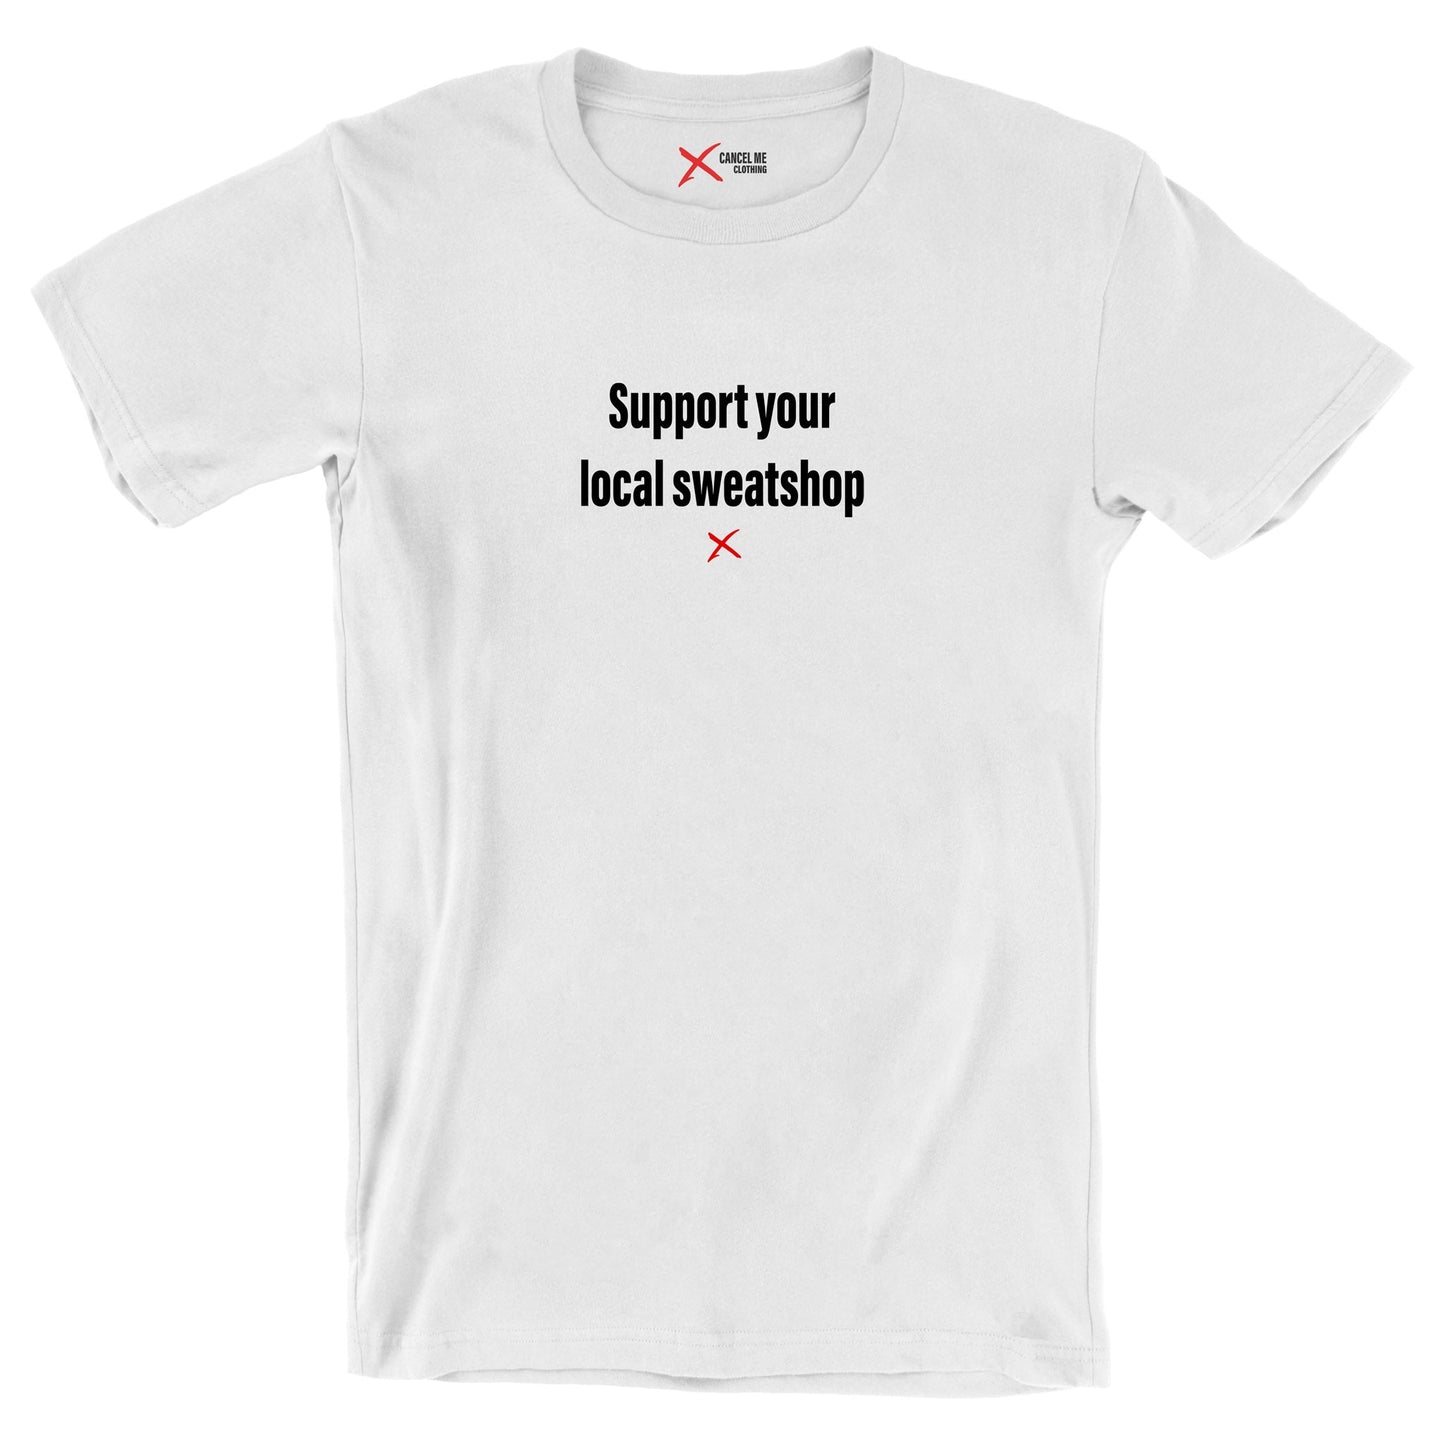 Support your local sweatshop - Shirt